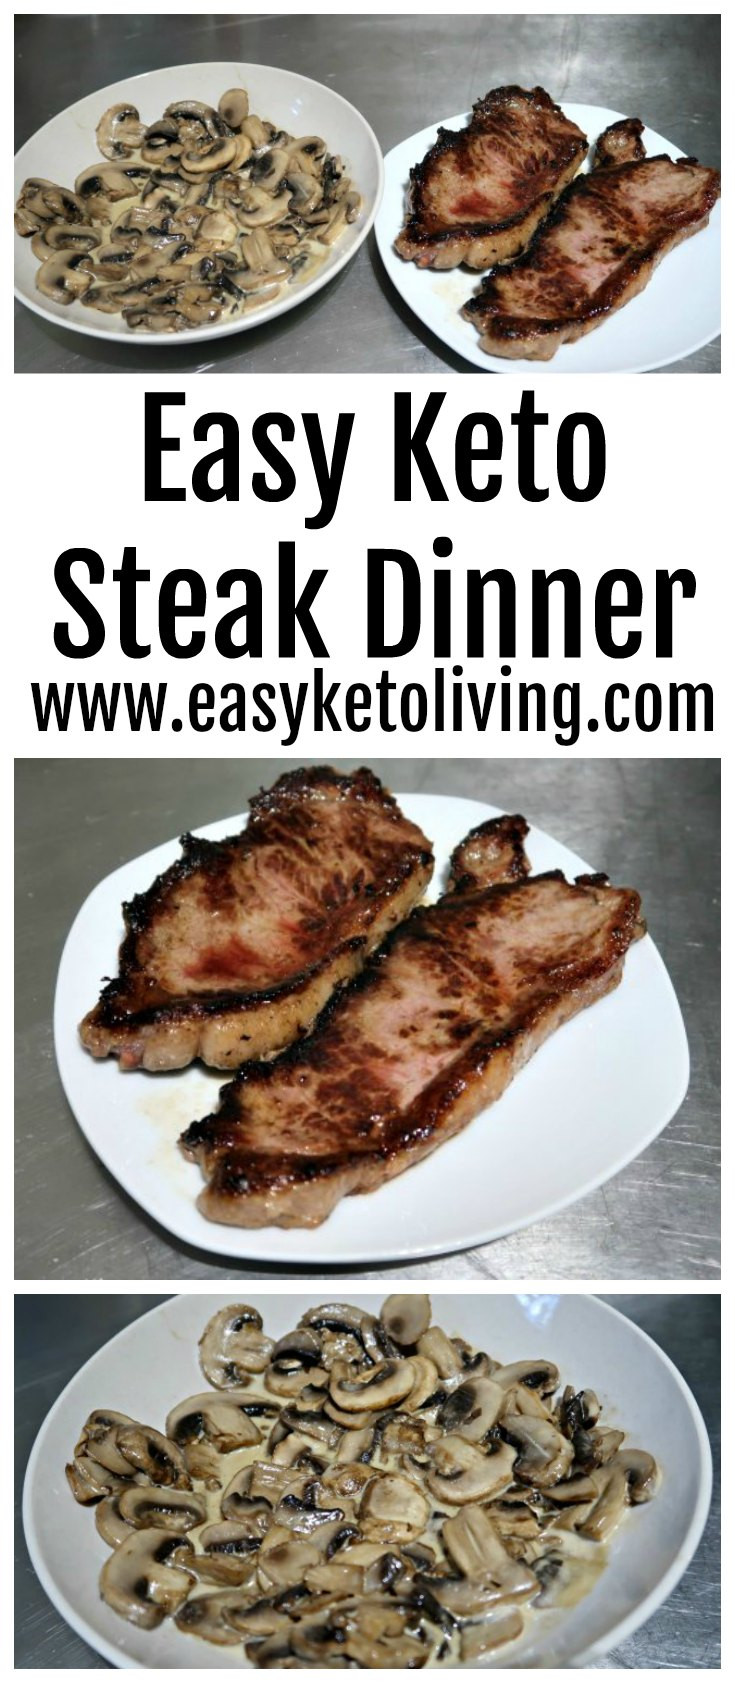 Keto Dinner Recipes Steak
 Keto Steak Dinner Recipe How to make an Easy Low Carb